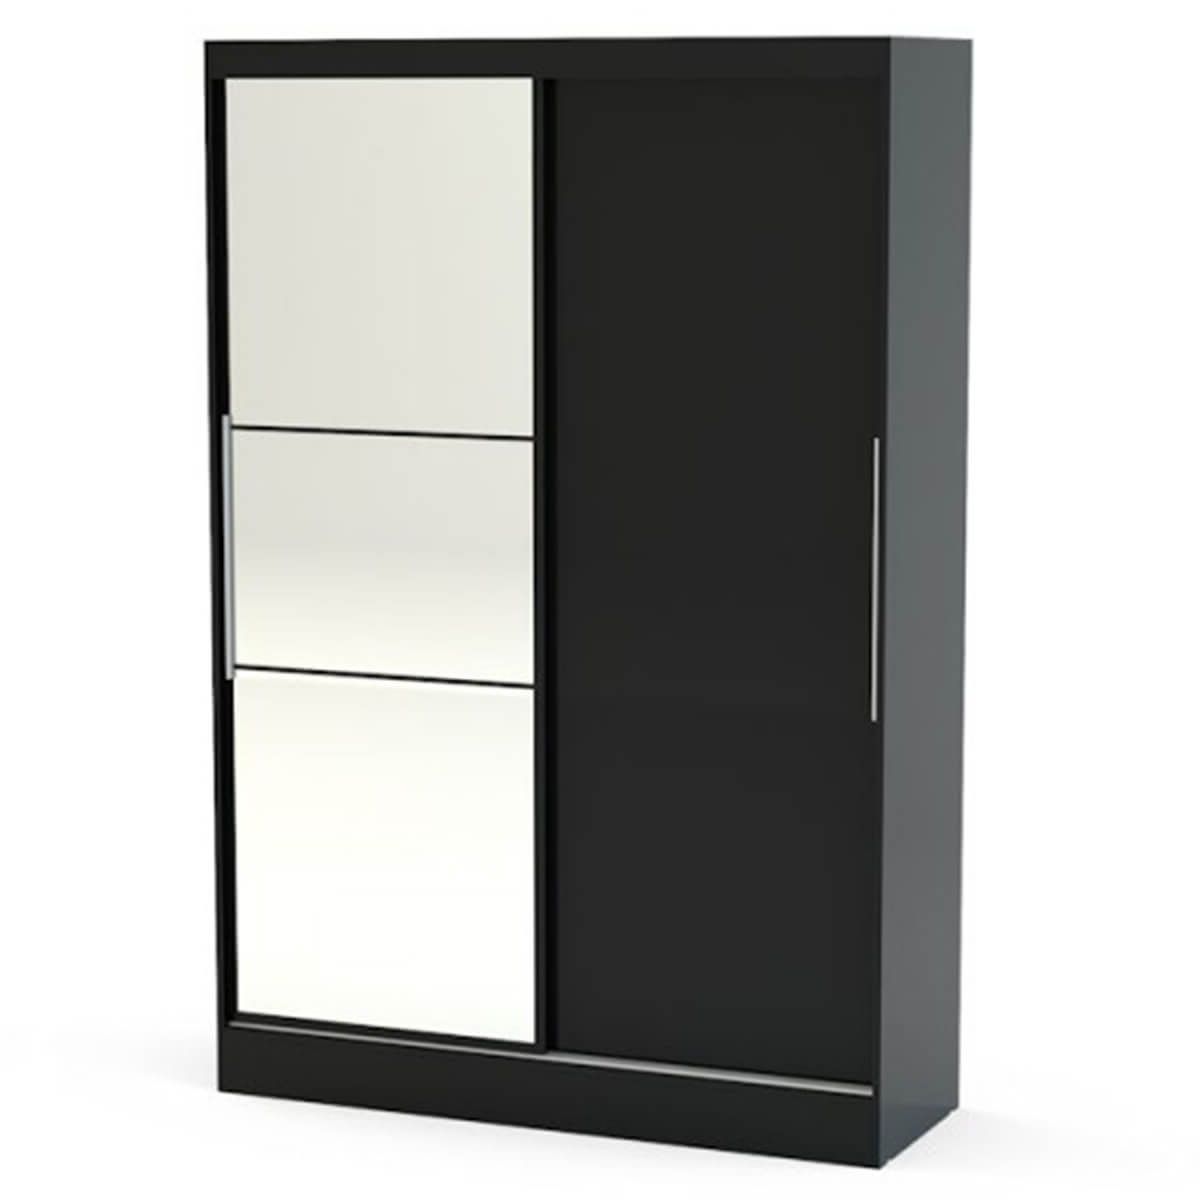 Lynx Black Gloss Wardrobe Mirrored Door | Bedroom Furniture | Fads Regarding Black Gloss Wardrobes (Gallery 20 of 20)